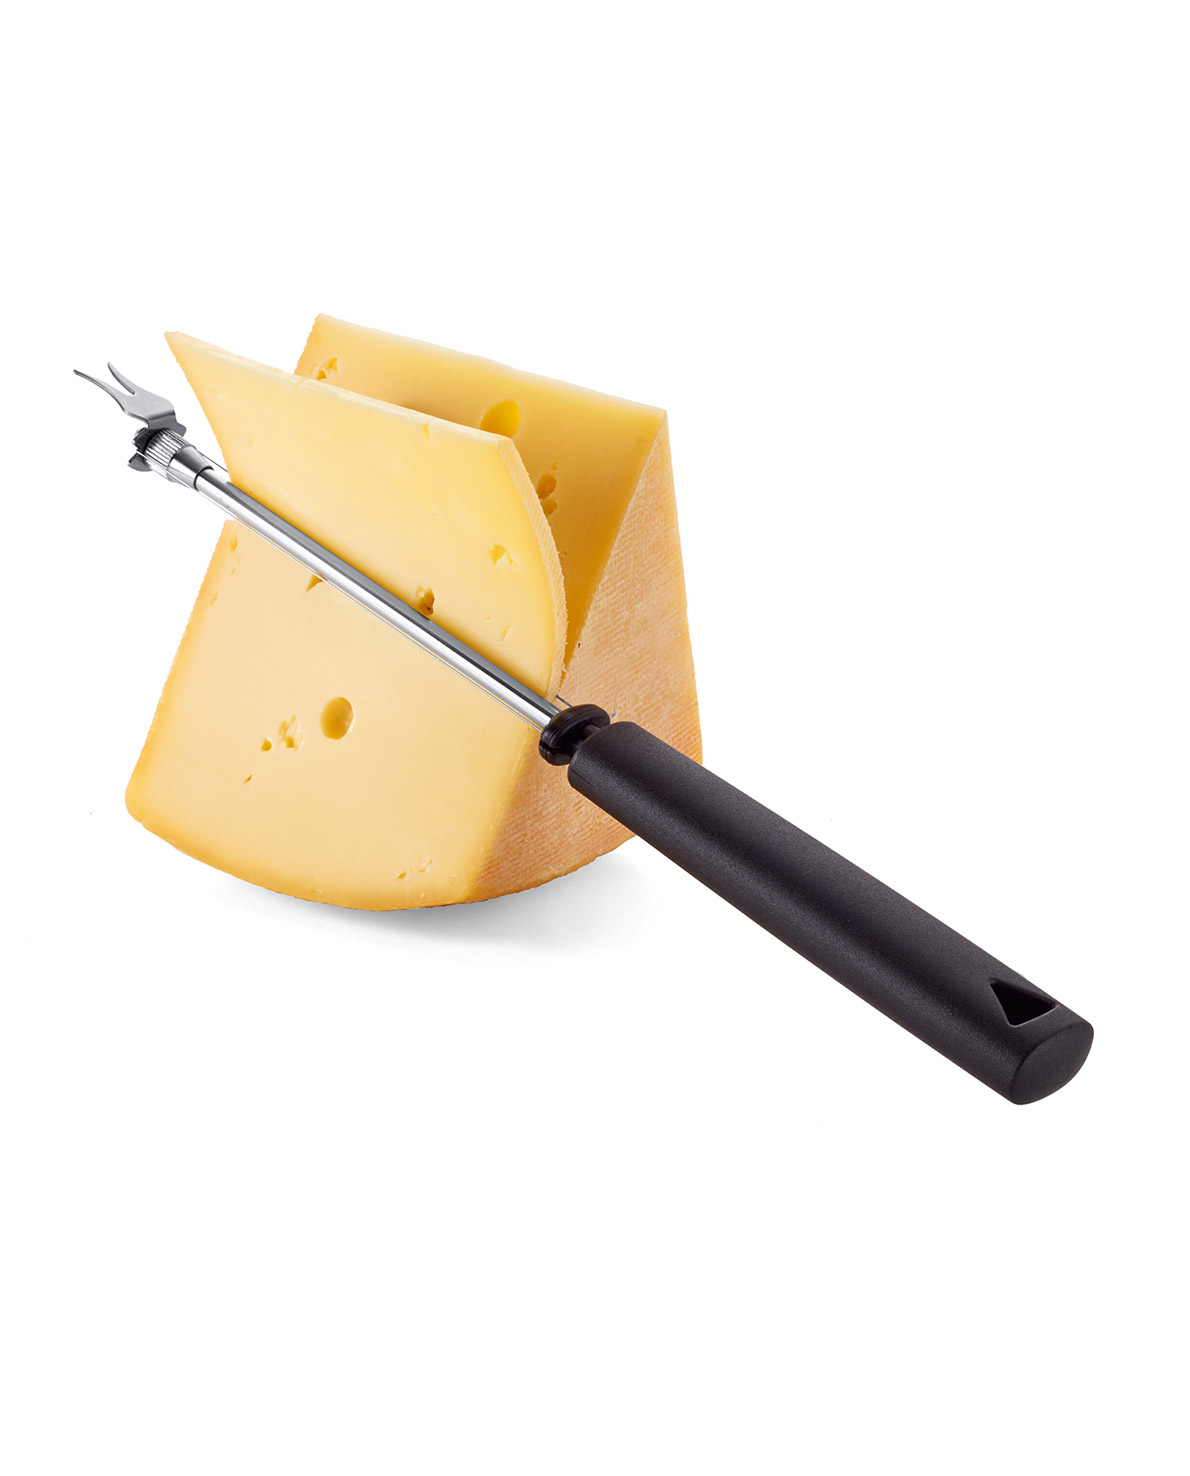 Käseschneider mit Draht Drahtkäseschenider triangle Made in Germany Solingen Kunststoff Spirit